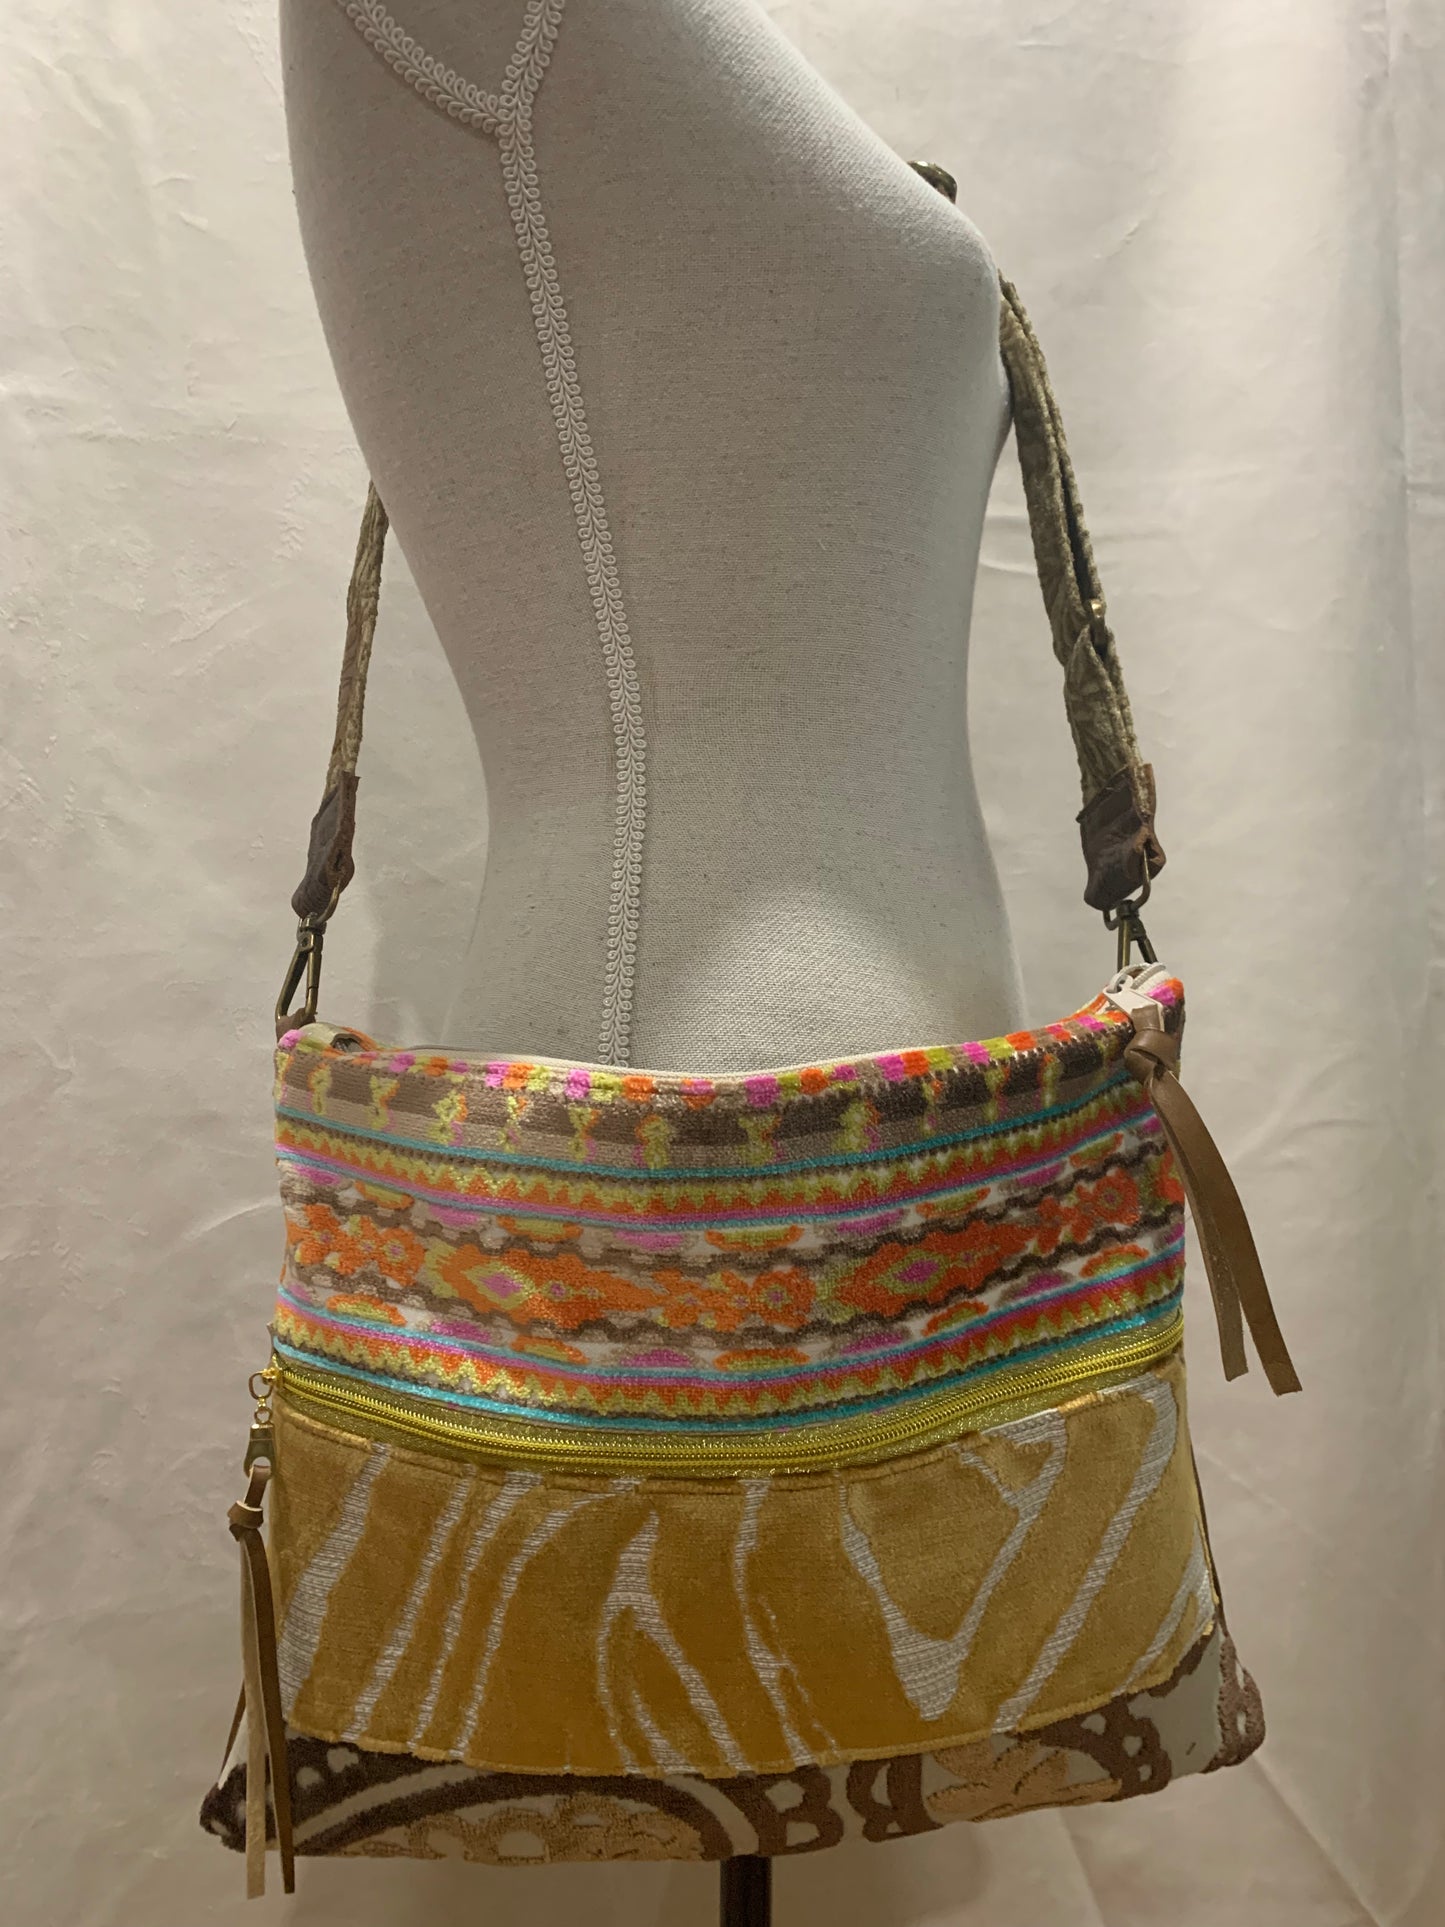 15x12 Adjustable Strap Summer Beauty! - DMD Bags